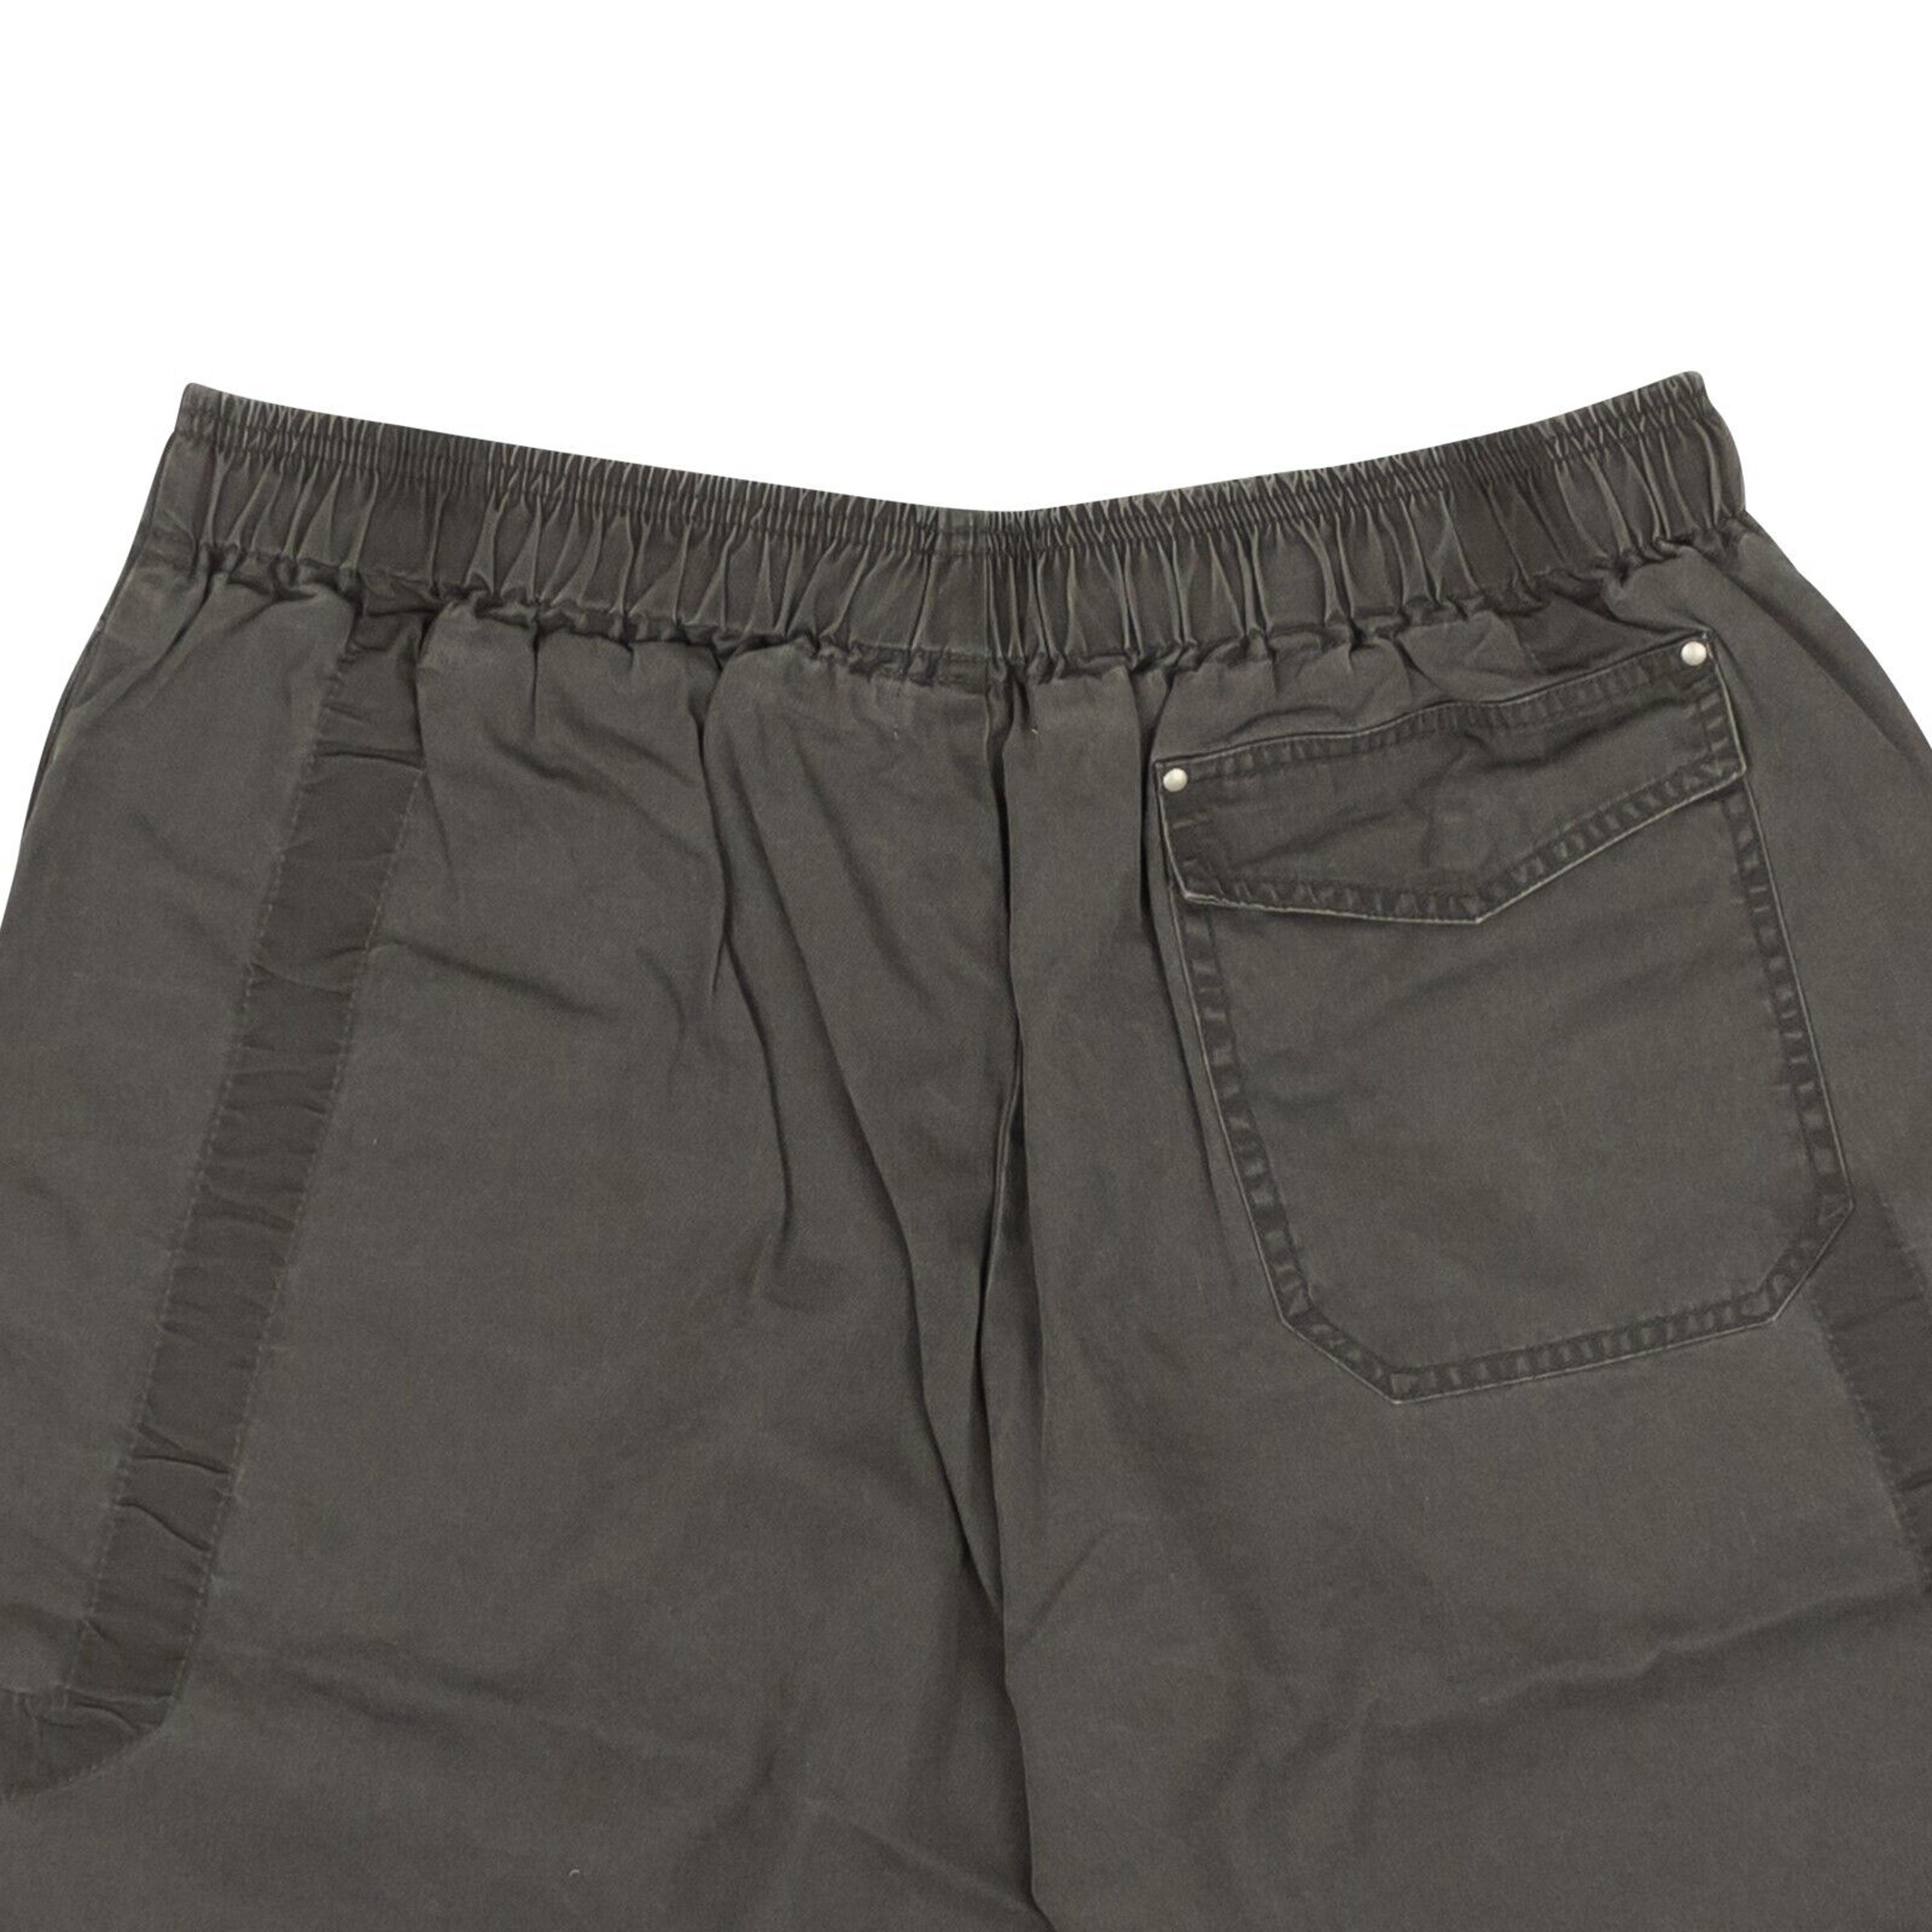 Alternate View 3 of Black Cotton Poplin Frame II Shorts